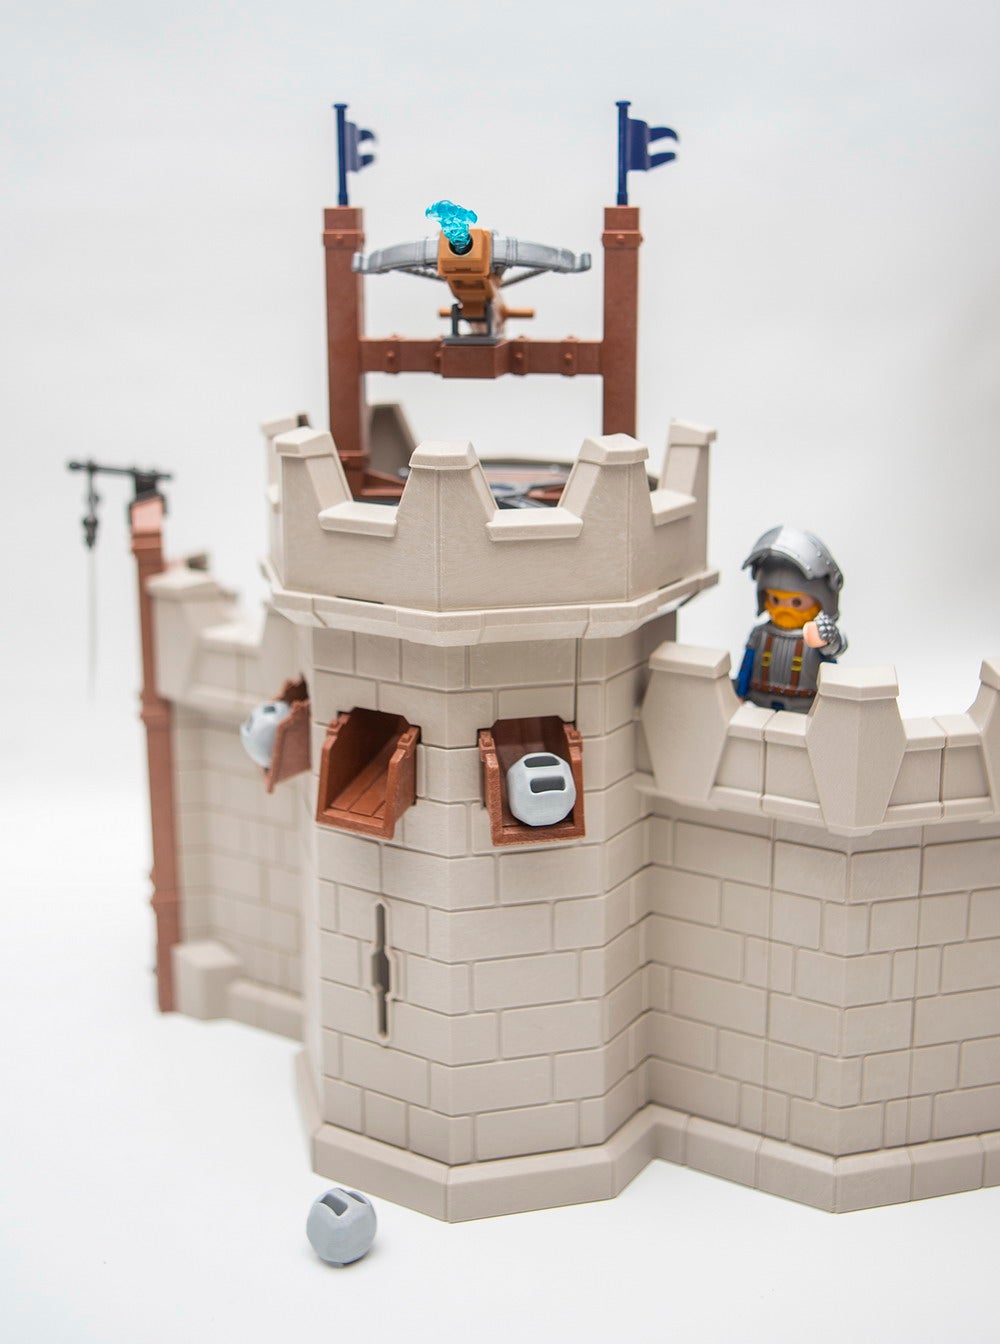 Playmobil Novelmore Castle Review